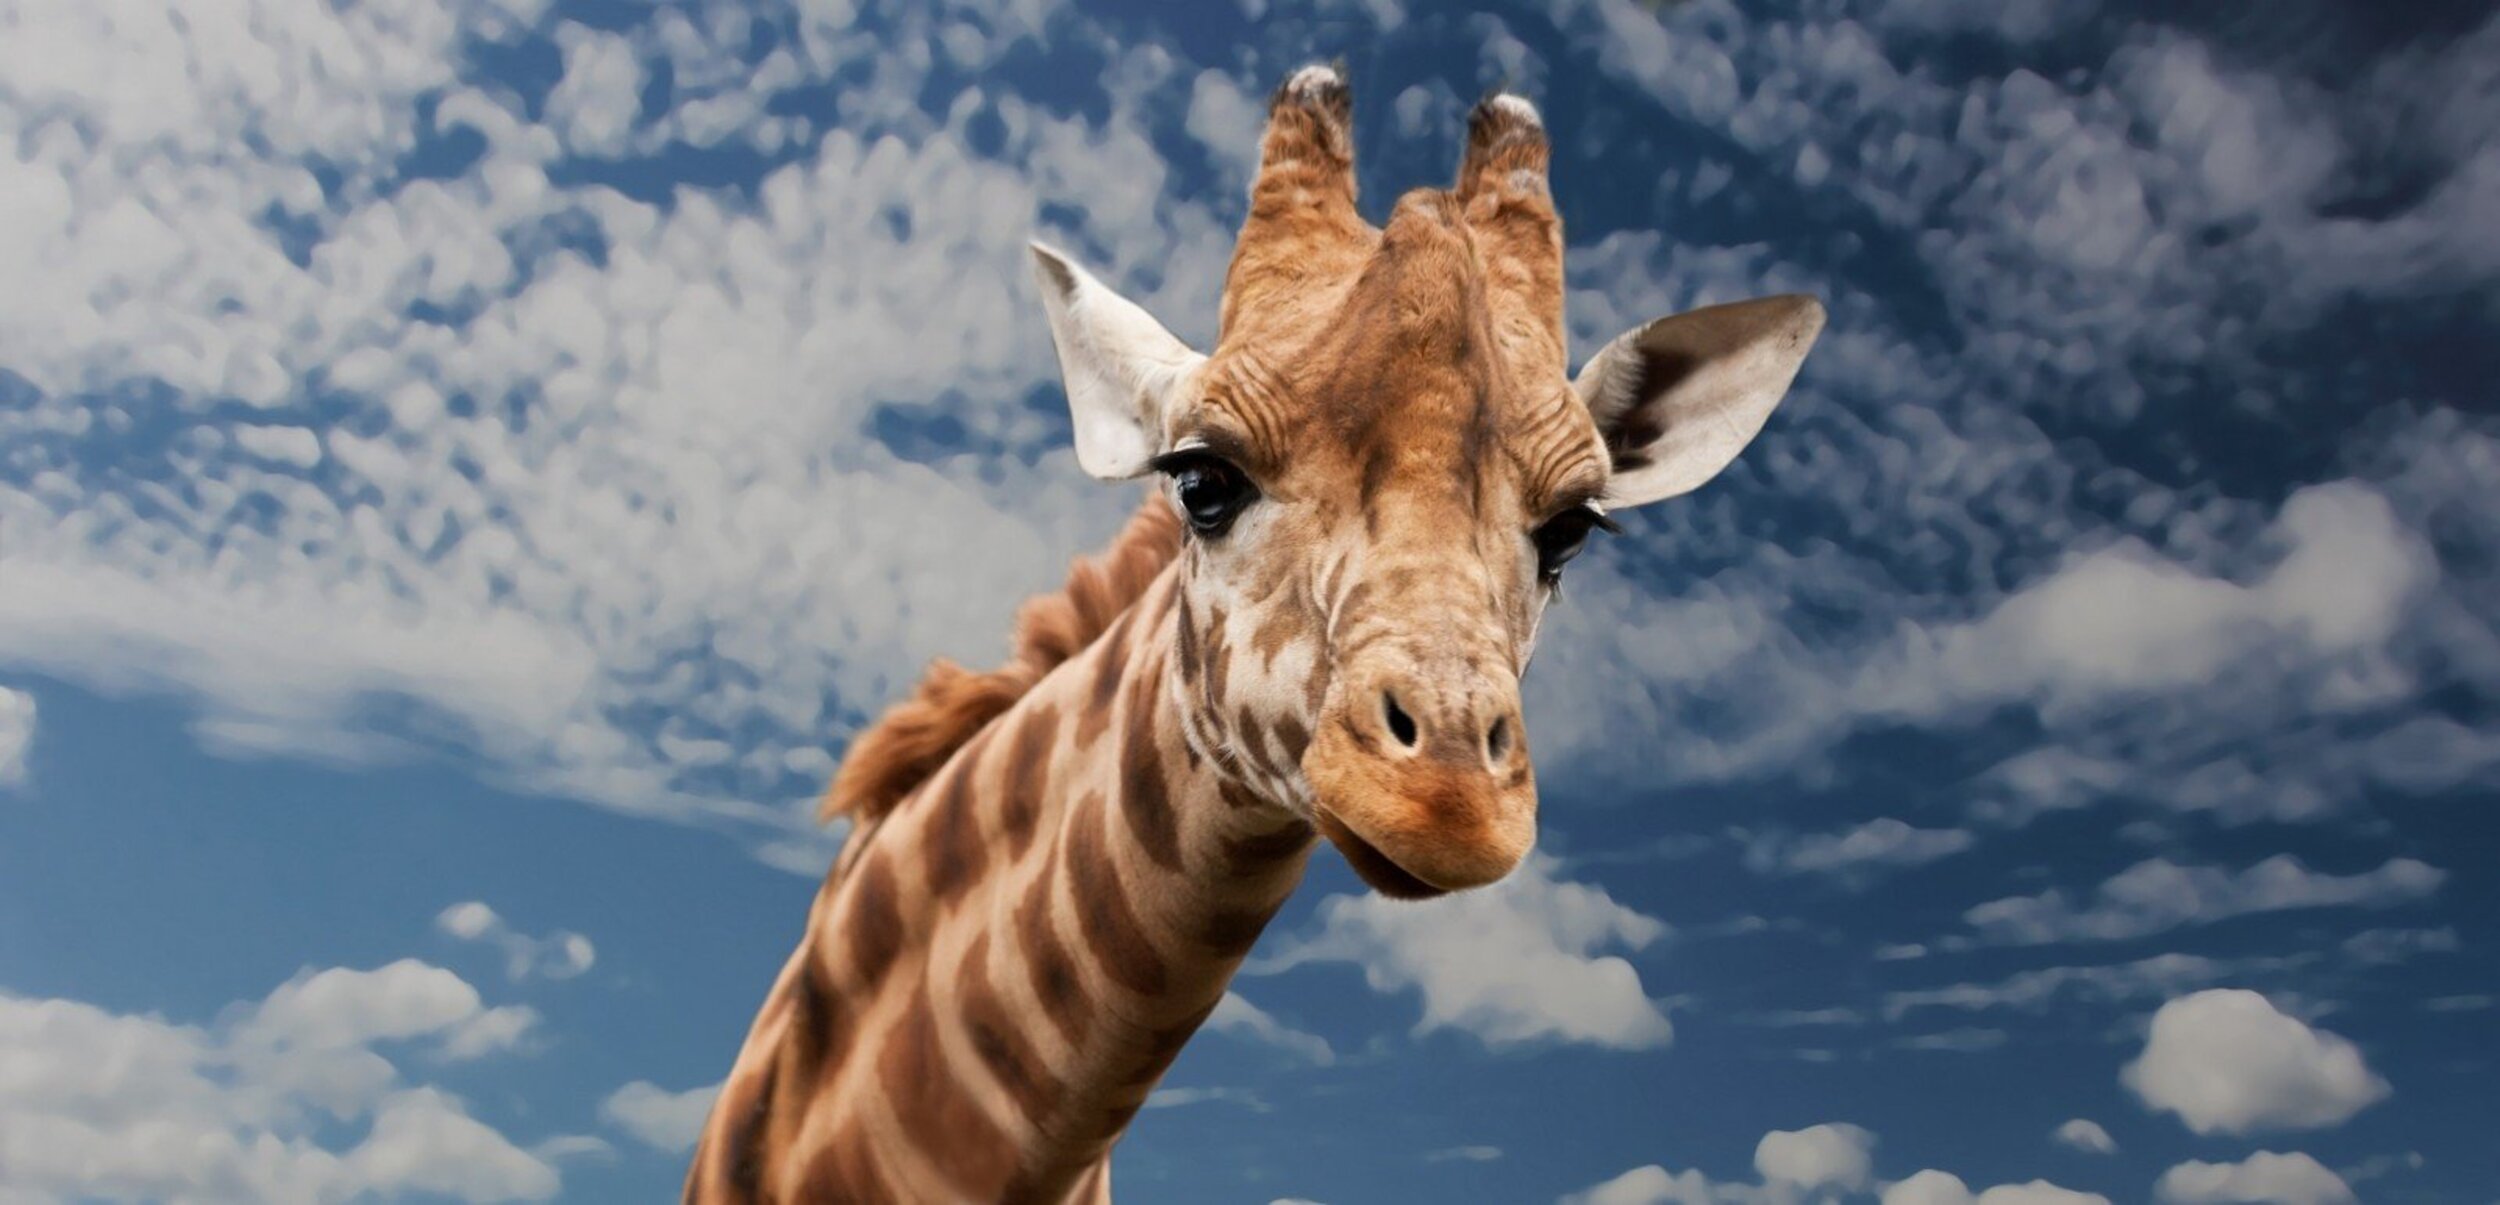 Giraffe wildlife safari.jpg